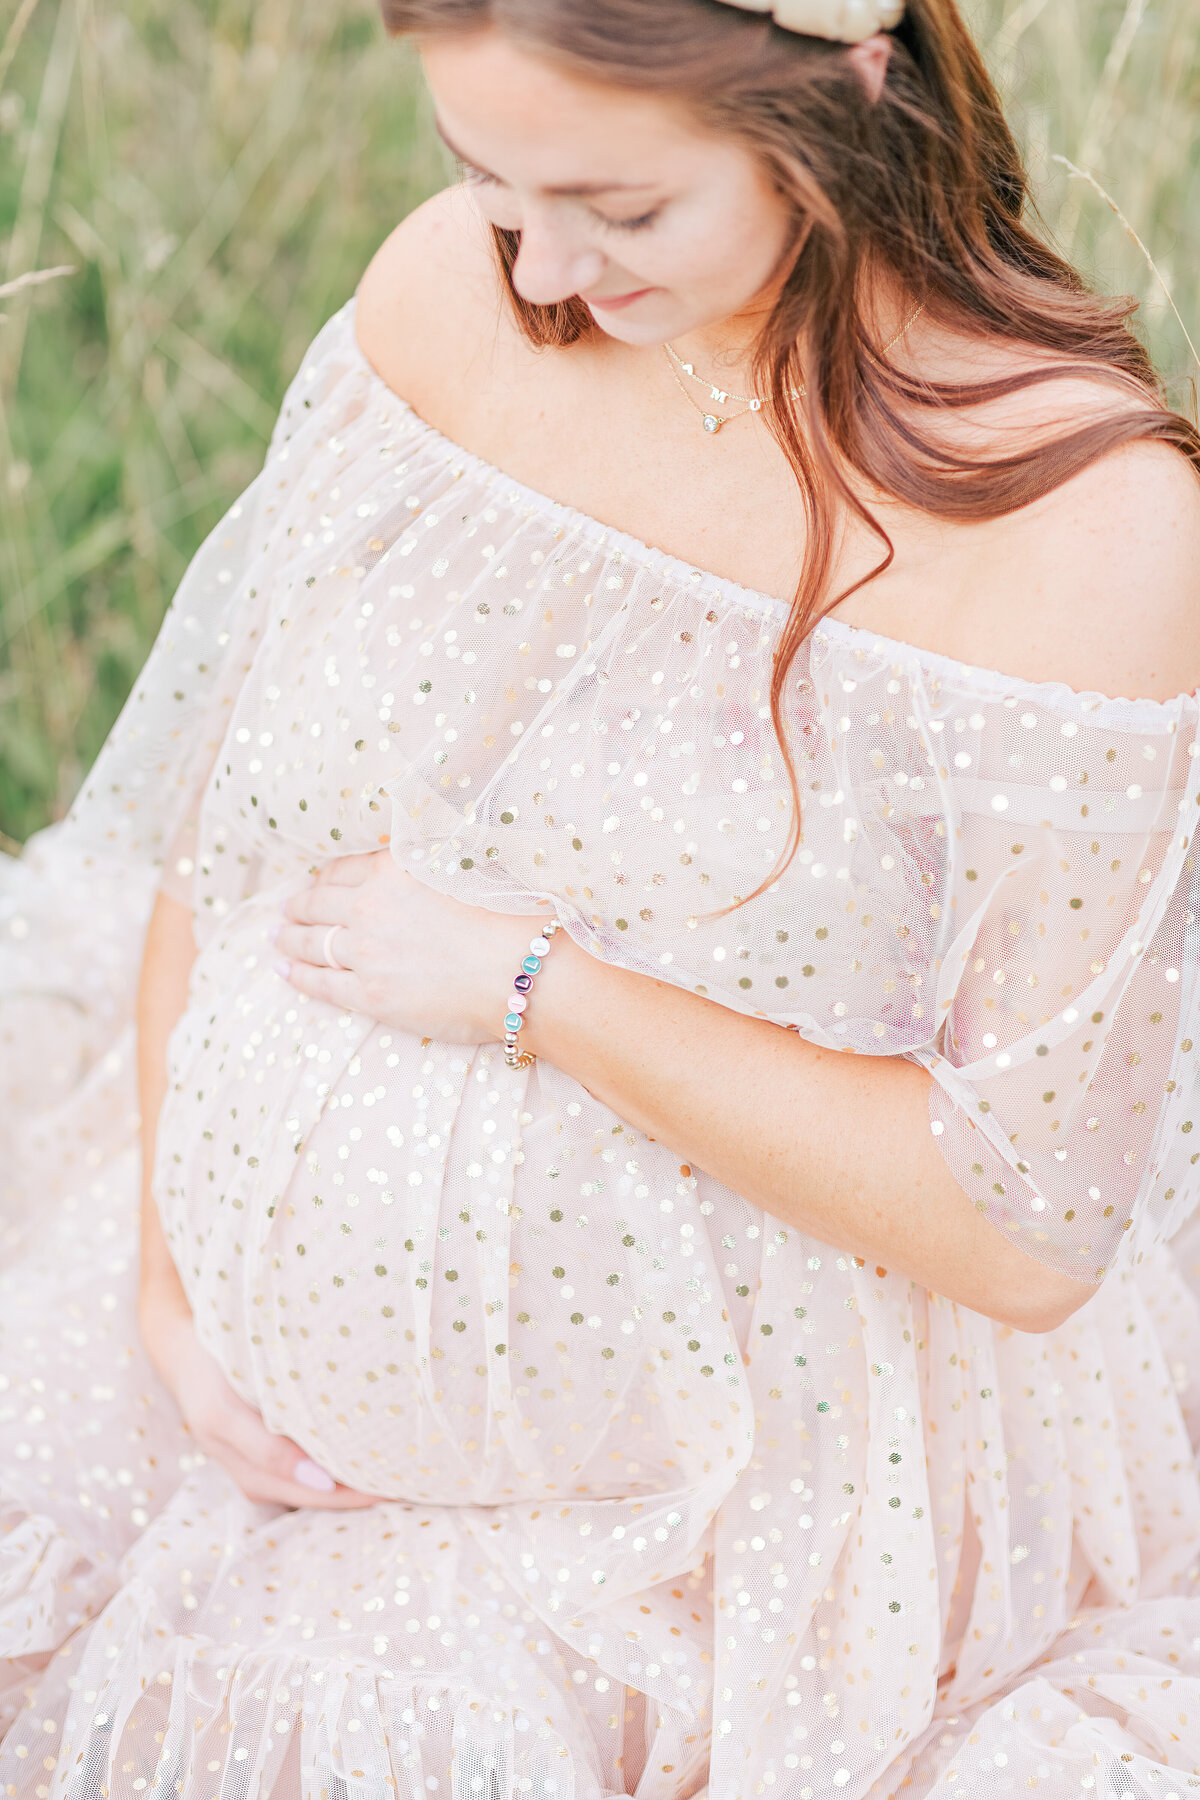 Greenville Maternity Photographer Lauren-7